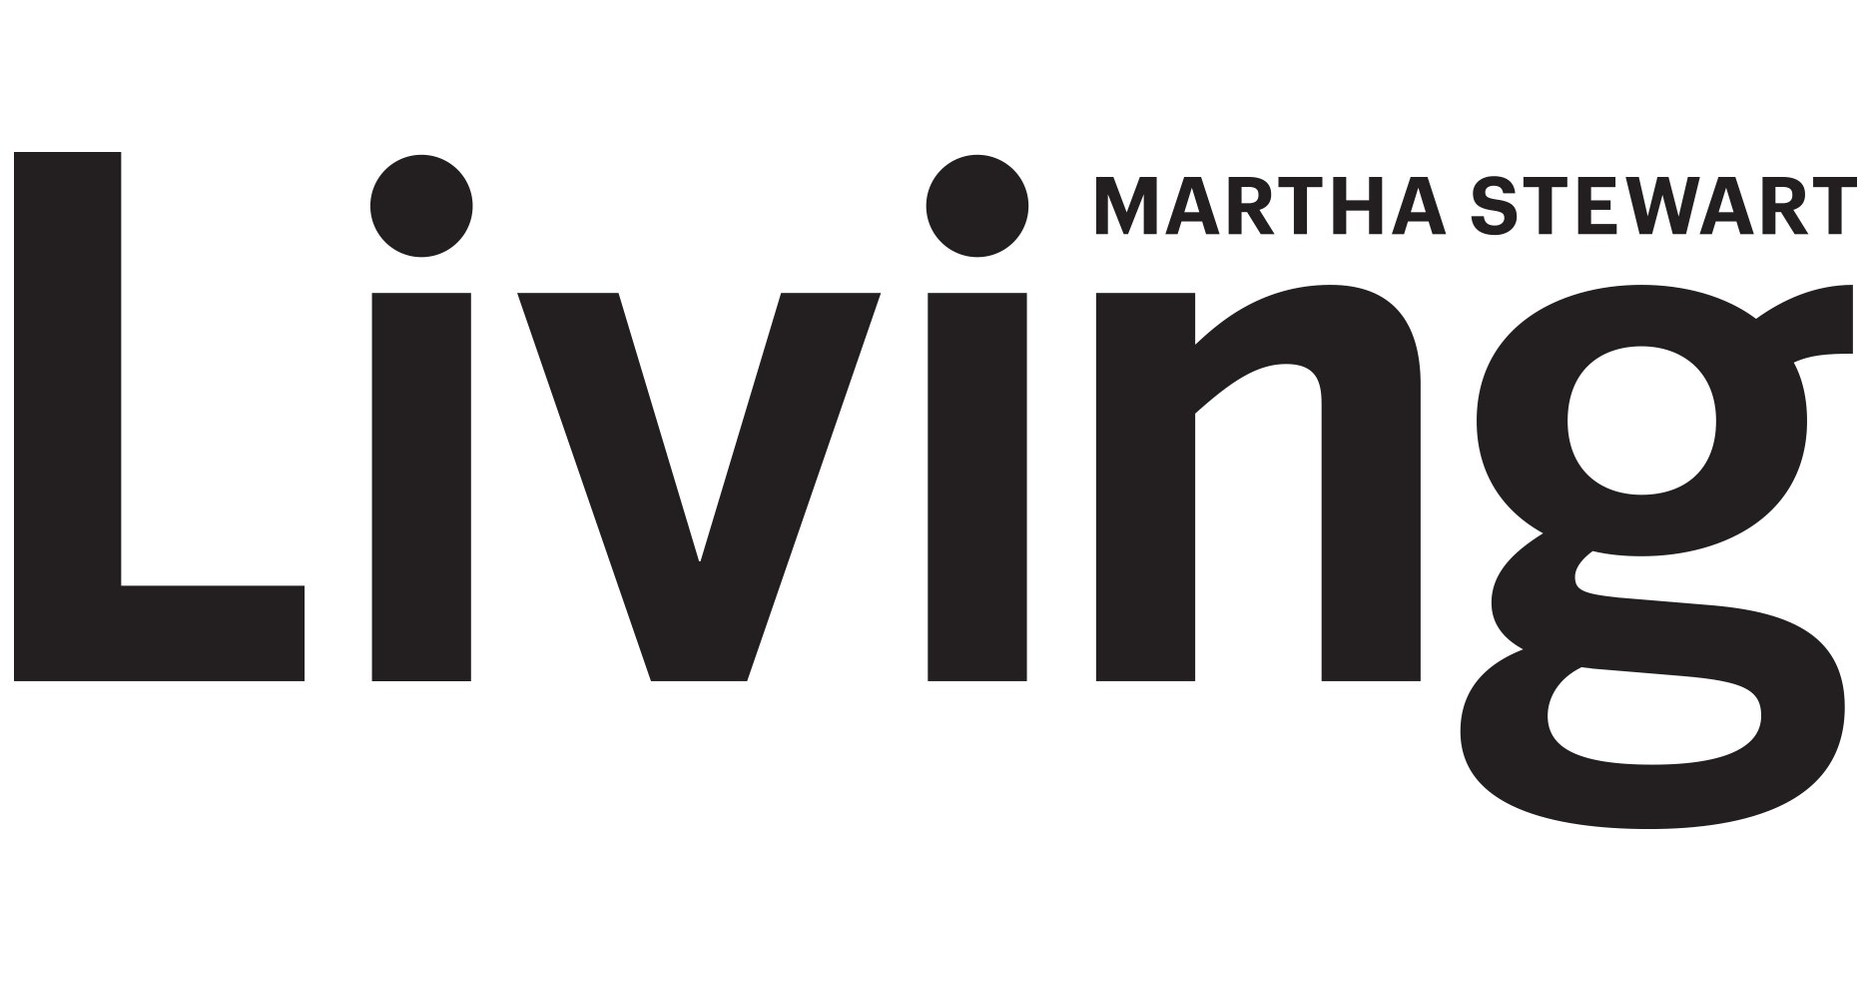 Martha stewart living magazine.png